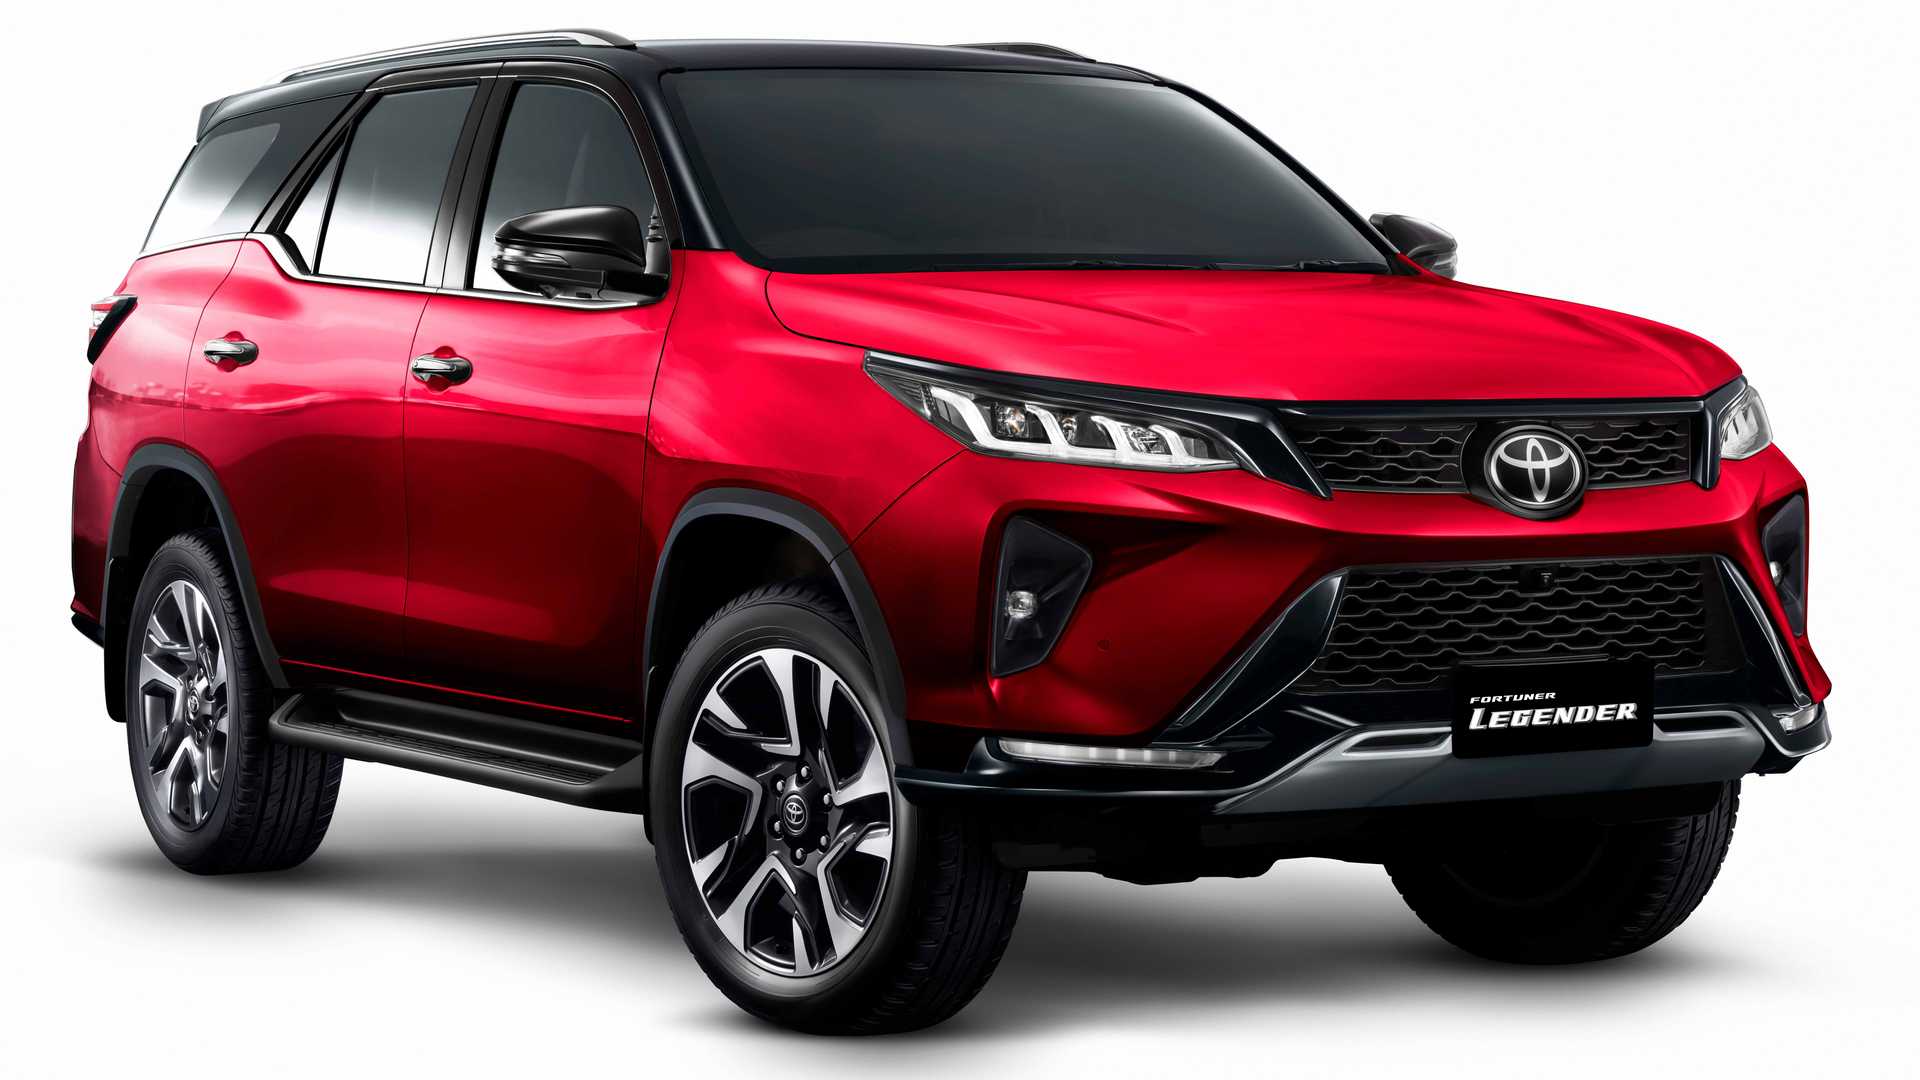 Toyota Fortuner Legender 2021 Price Philippines New Cars 2021